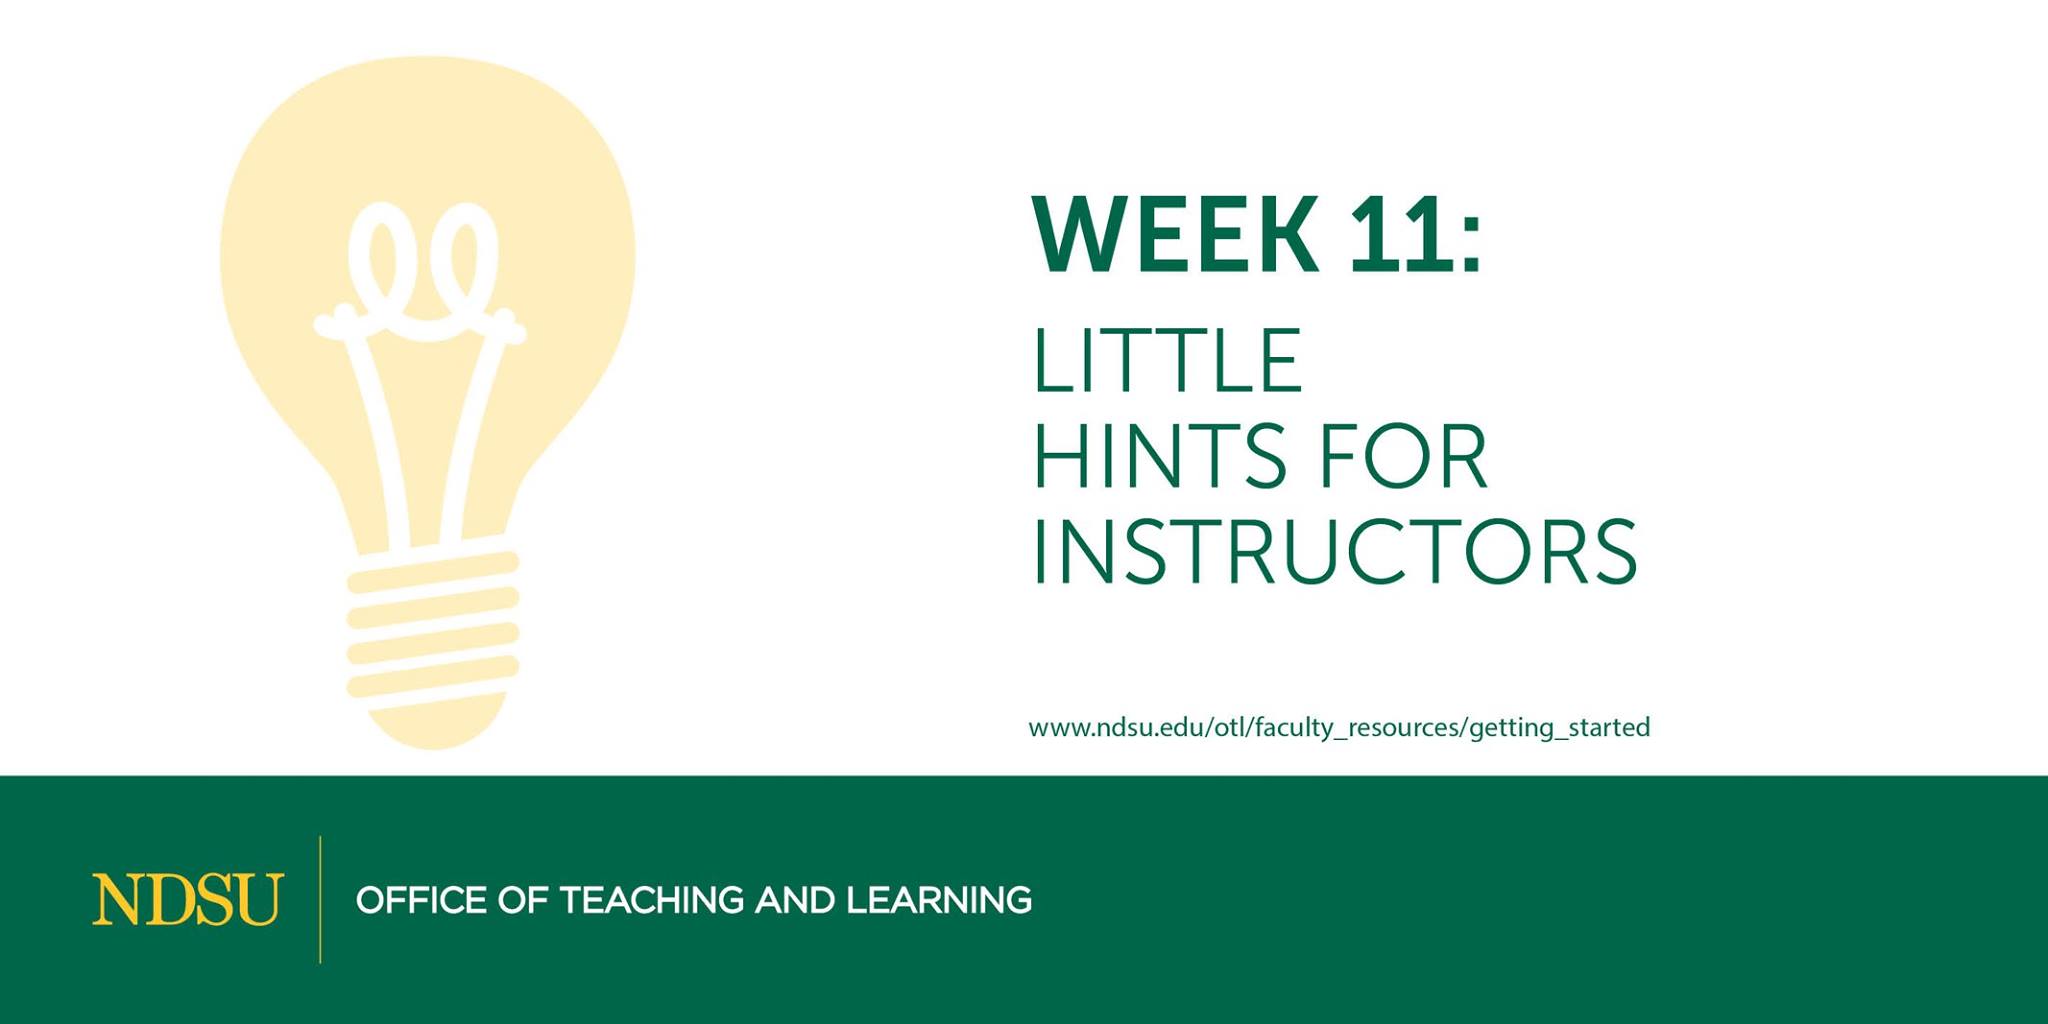 Week 11 Little Hints for Instructors